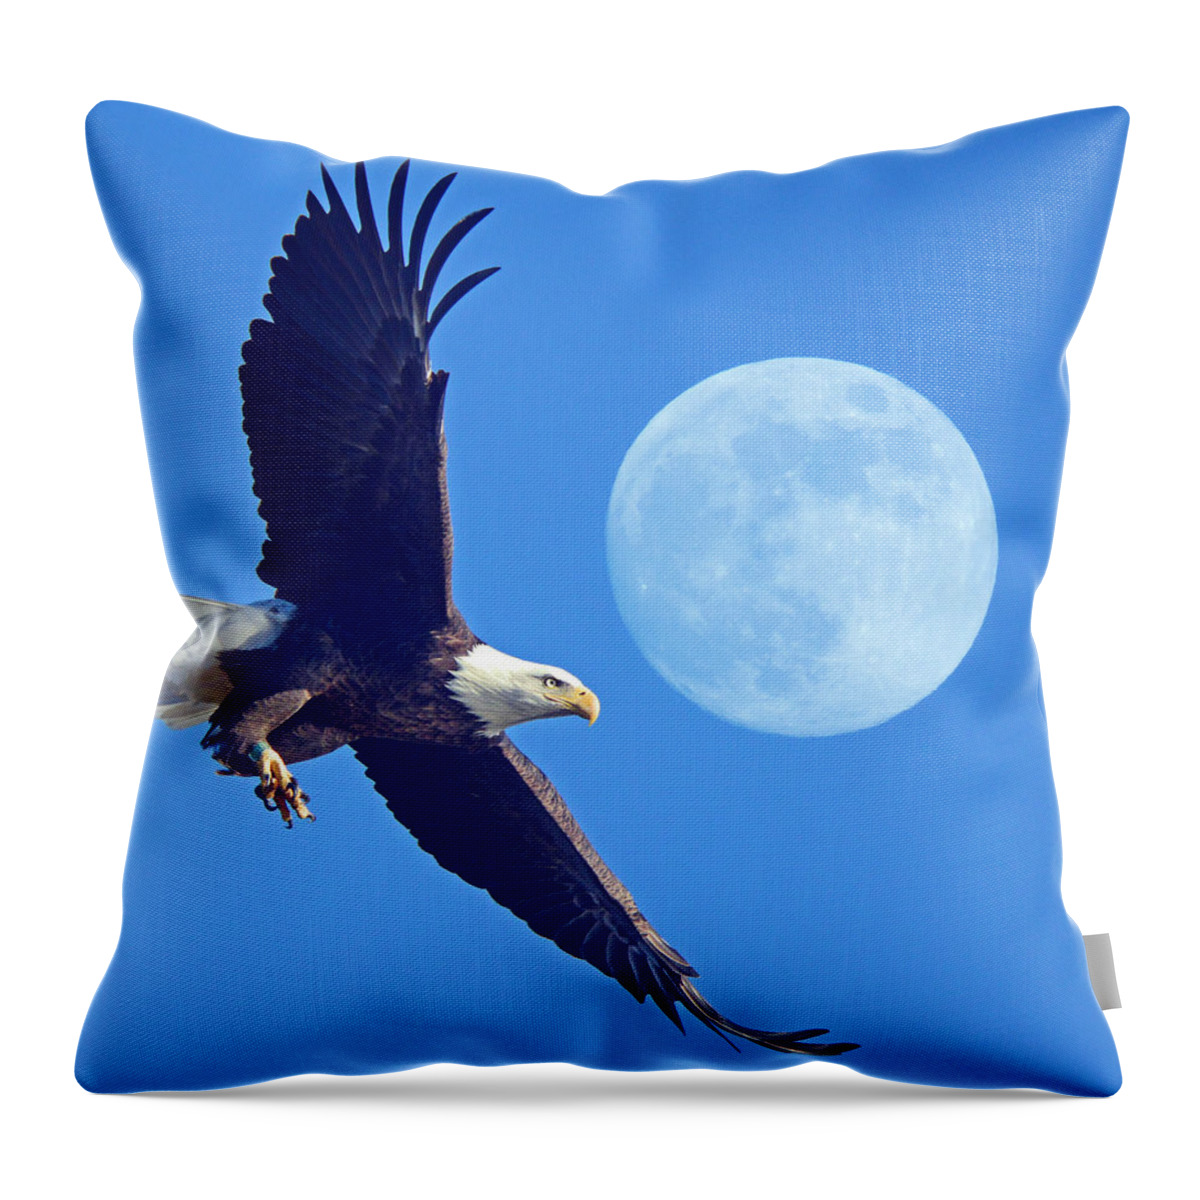 Bald Eagle And Full Moon Throw Pillow featuring the photograph Bald Eagle and Full Moon by Raymond Salani III